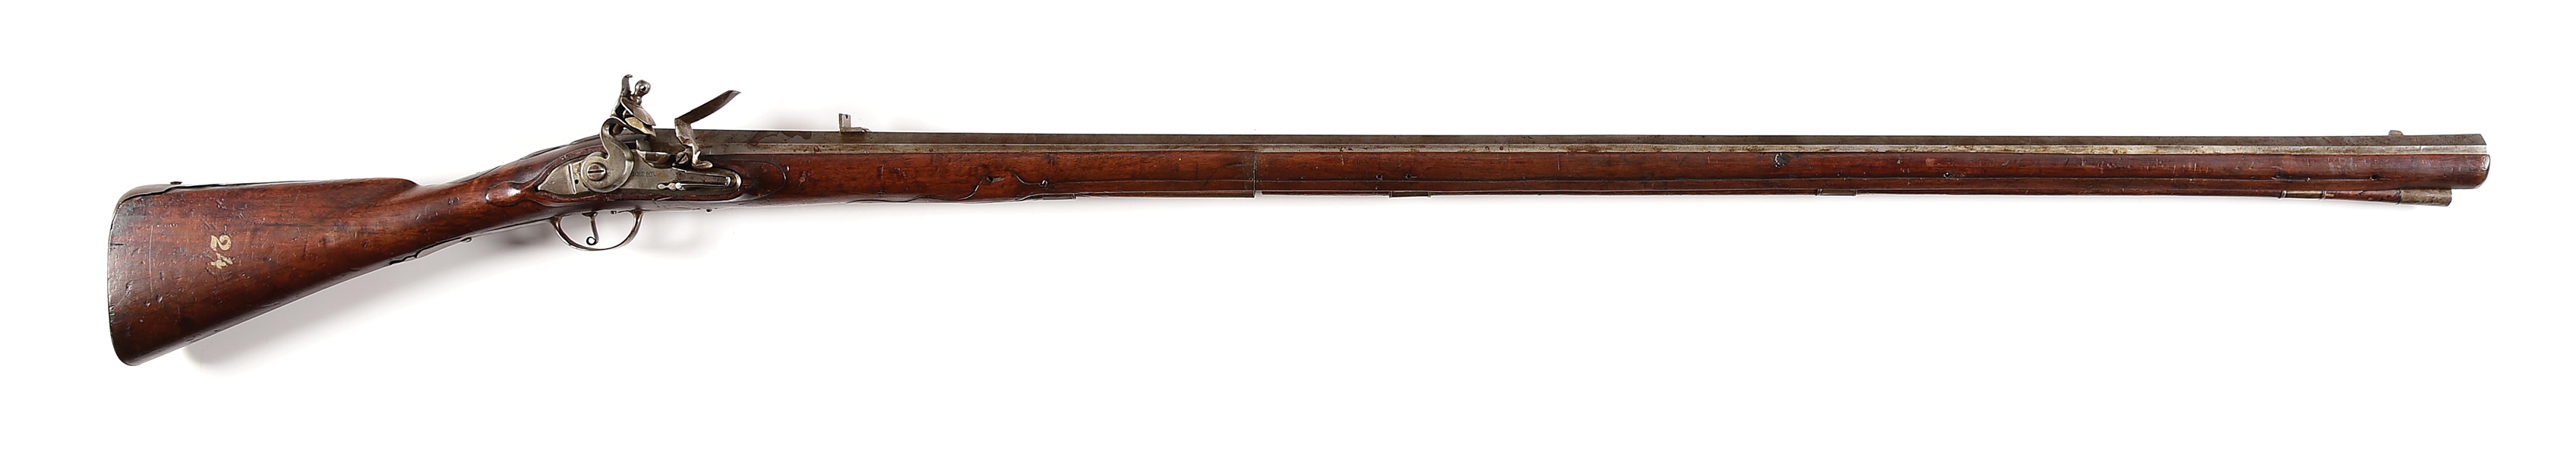 (A) MASSIVE GERMAN FLINTLOCK WALL GUN BY J.J. BEHR, C. 1750-1770.